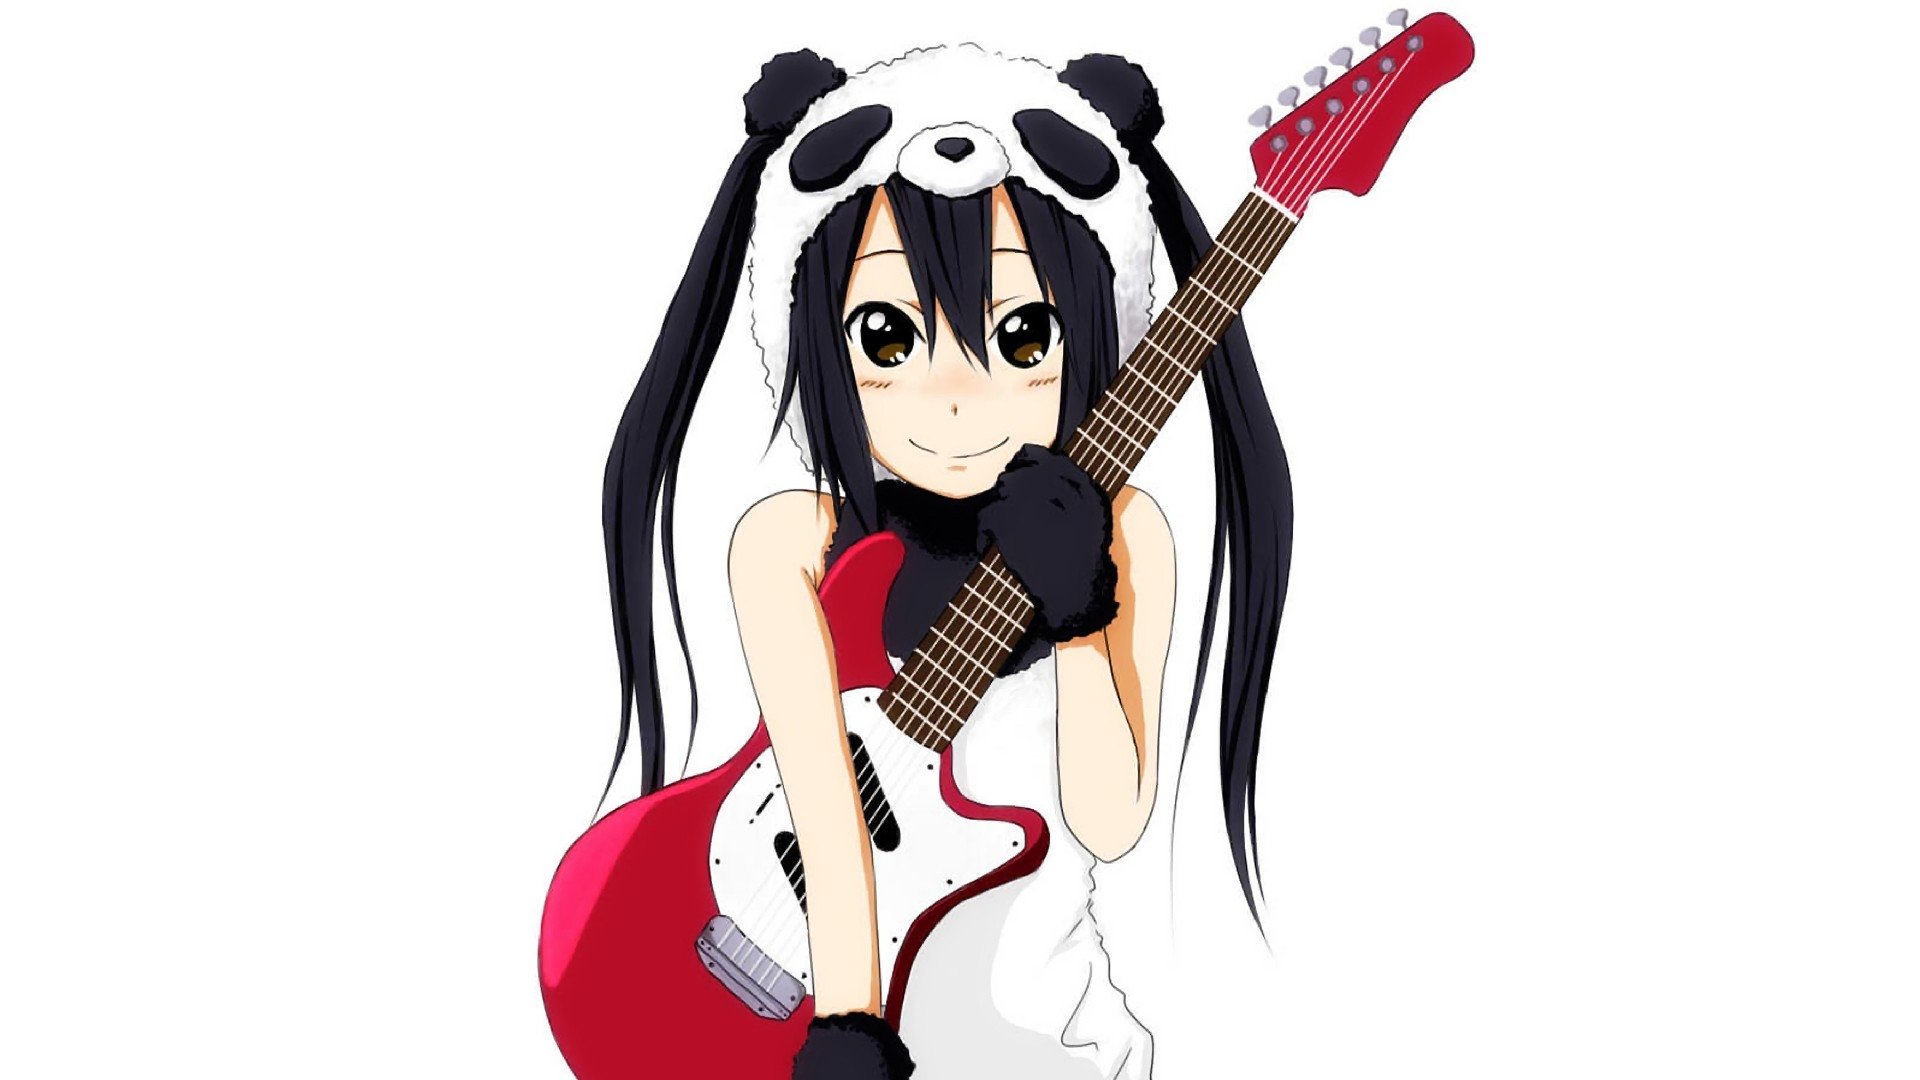 Wallpaper, illustration, anime, guitar, hat, cartoon, panda, girl, smile, nice, costume 1920x1080